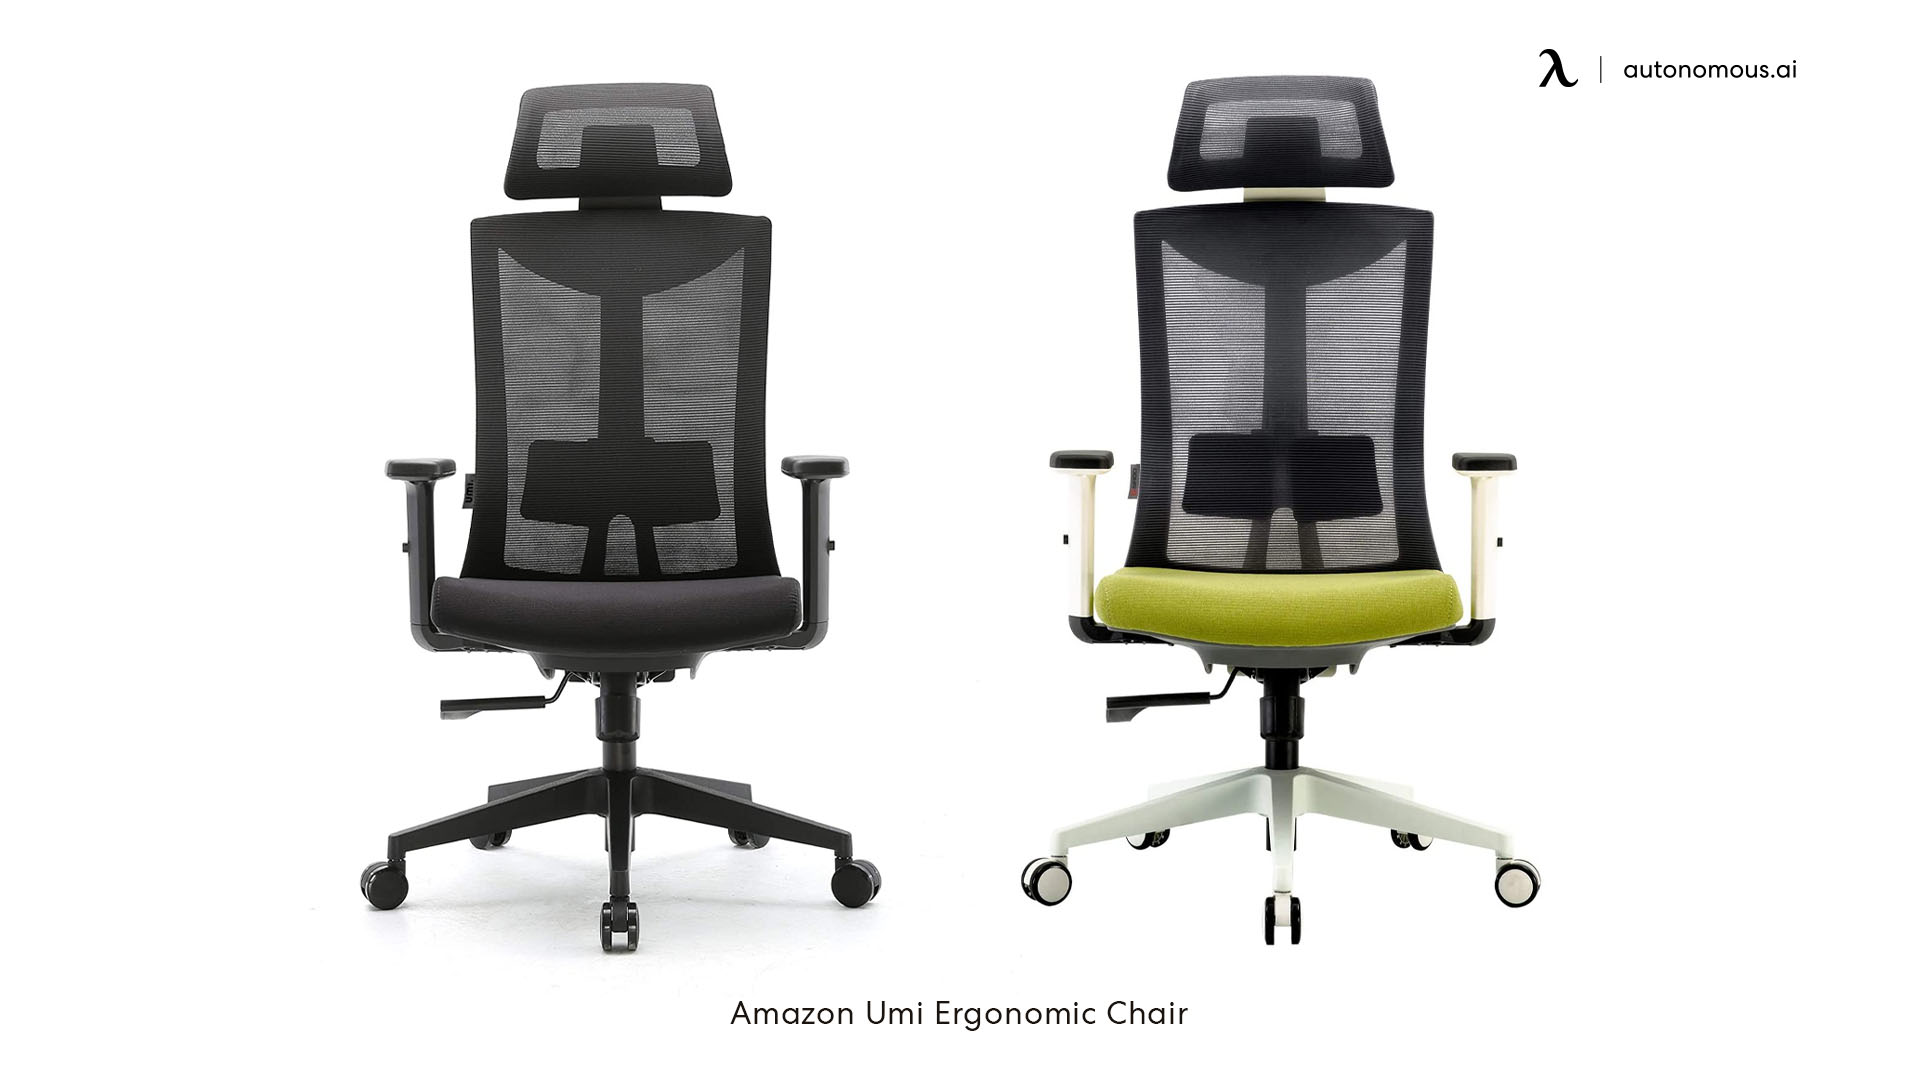 Amazon Umi Ergonomic Chair